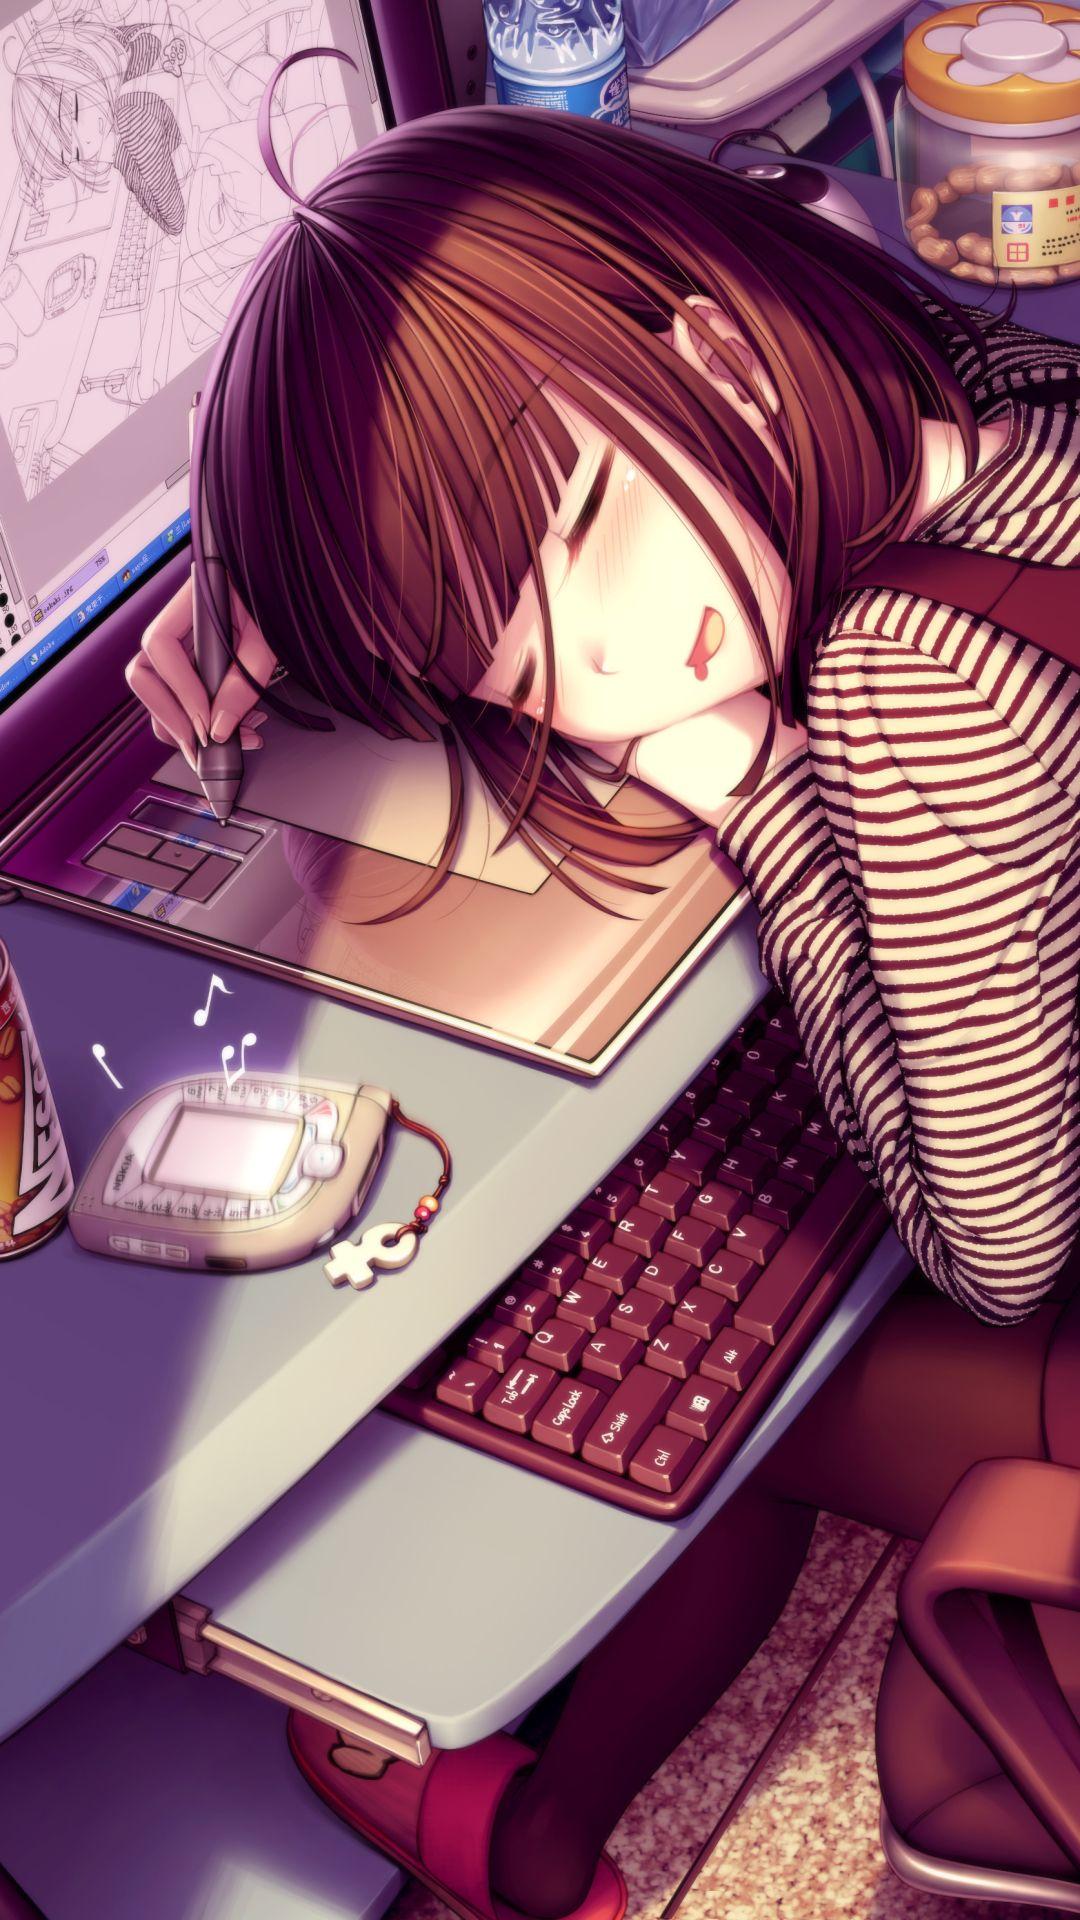 Anime Girl Phone Wallpapers - Top Free Anime Girl Phone Backgrounds